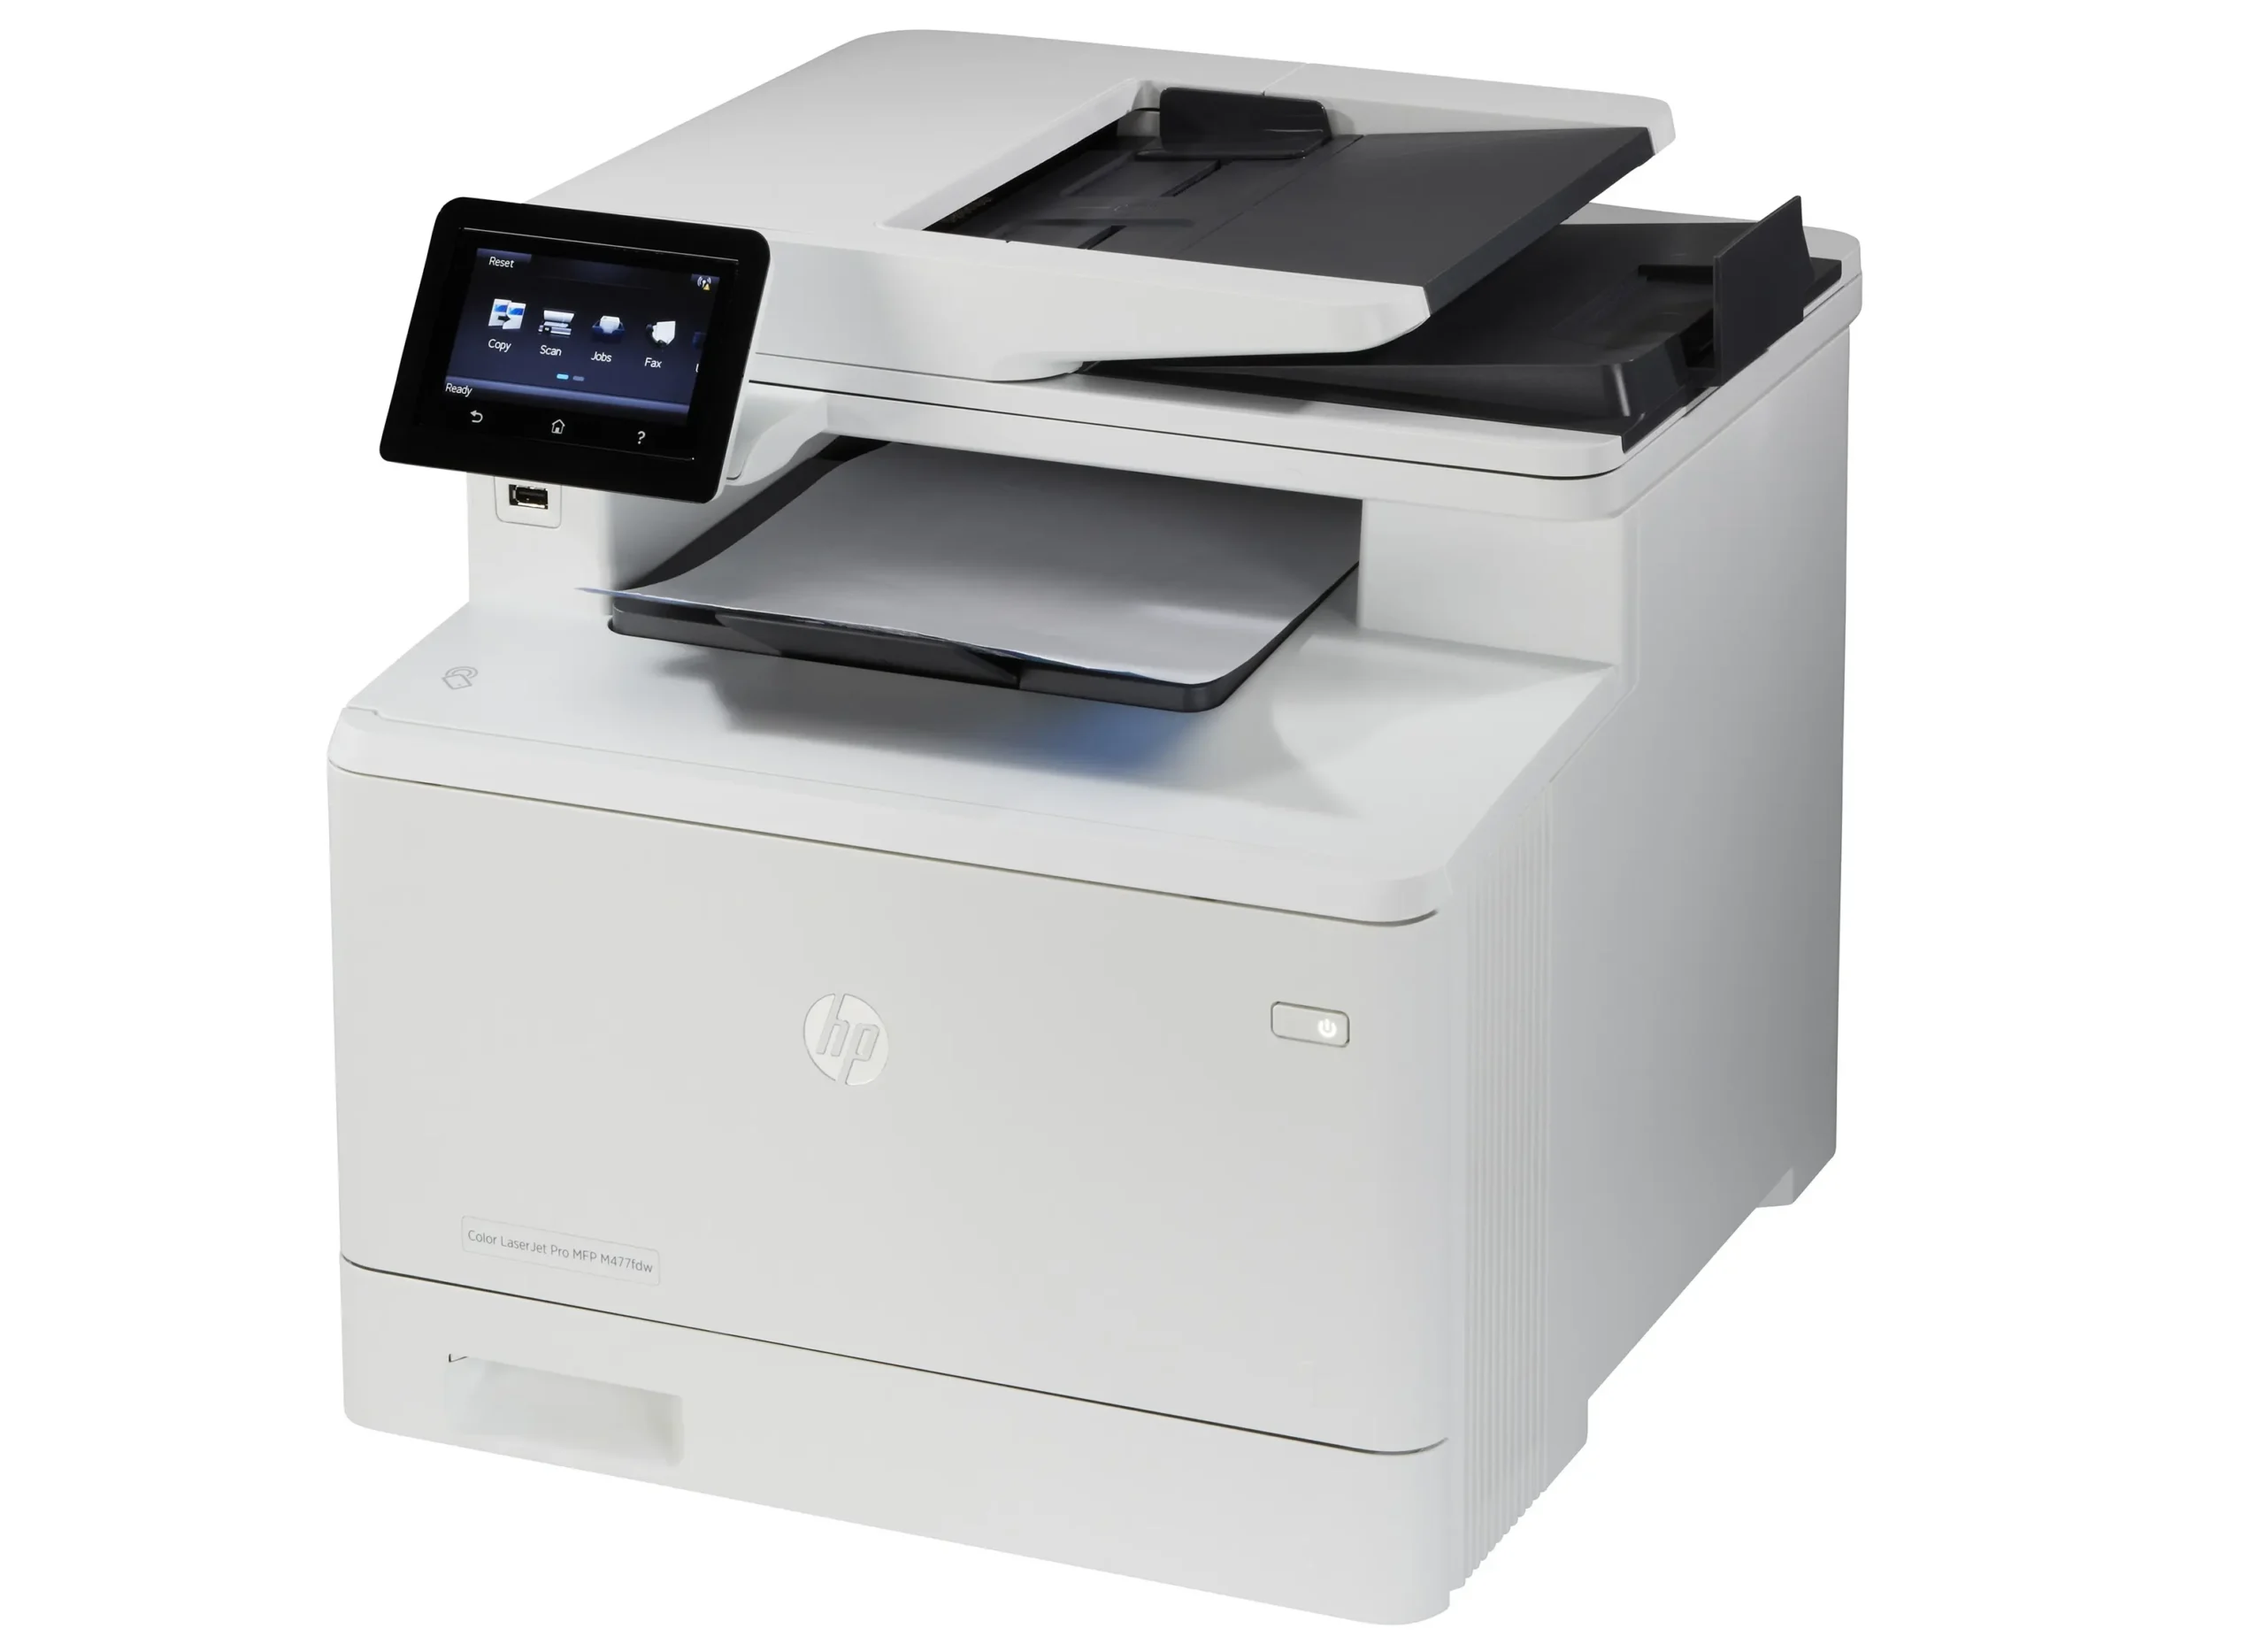 hewlett packard laserjet pro m477fdw multifunction wireless color laser printer - What toner does HP Color LaserJet Pro MFP M477FDW use